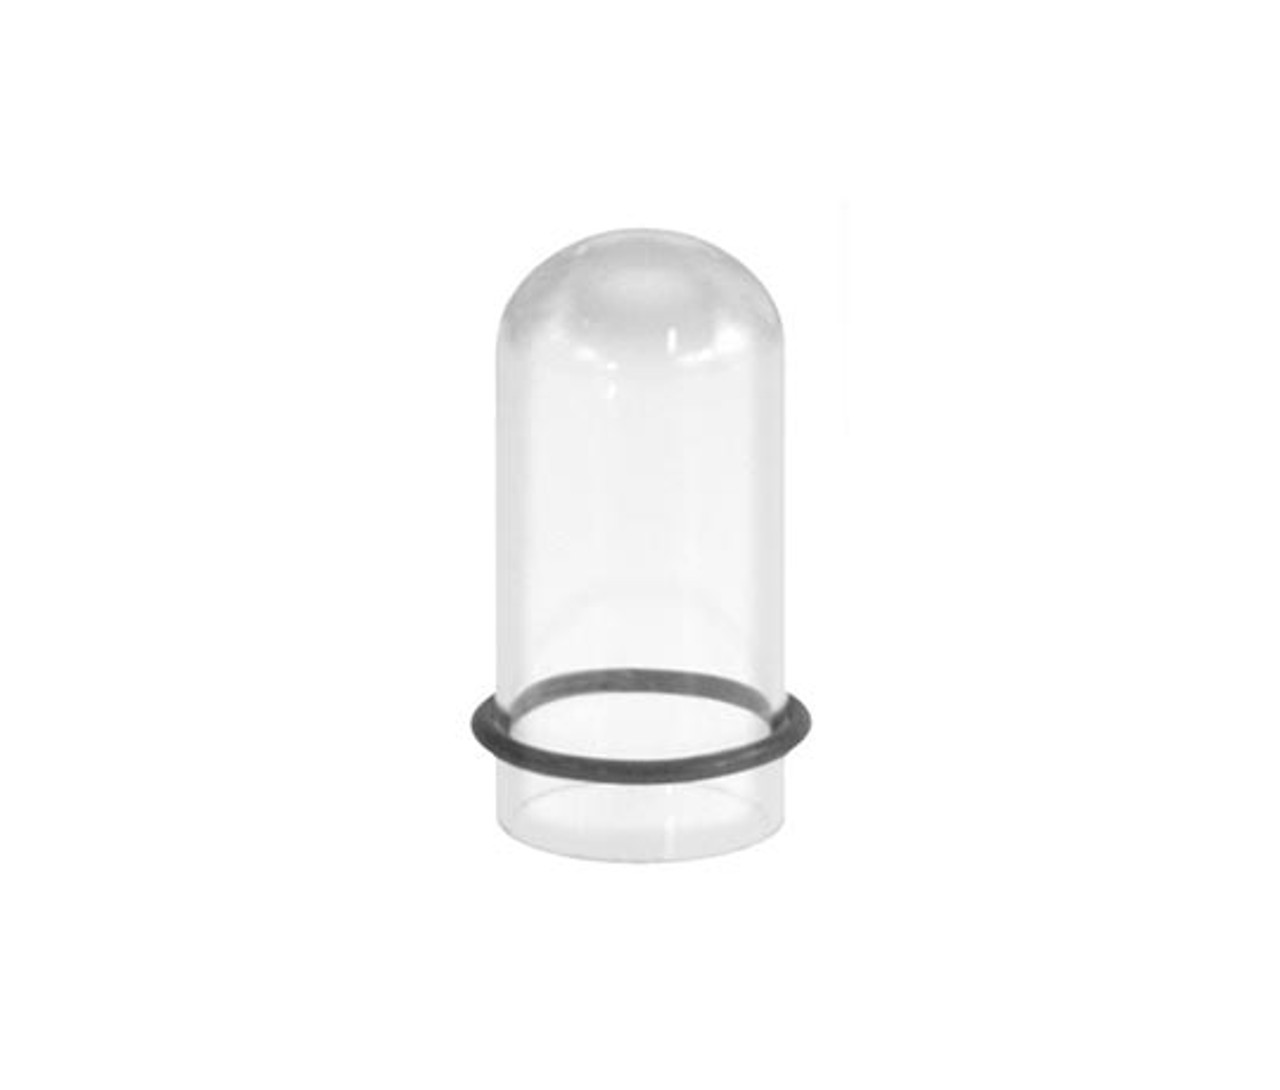 Replacement Glass Heat Cap